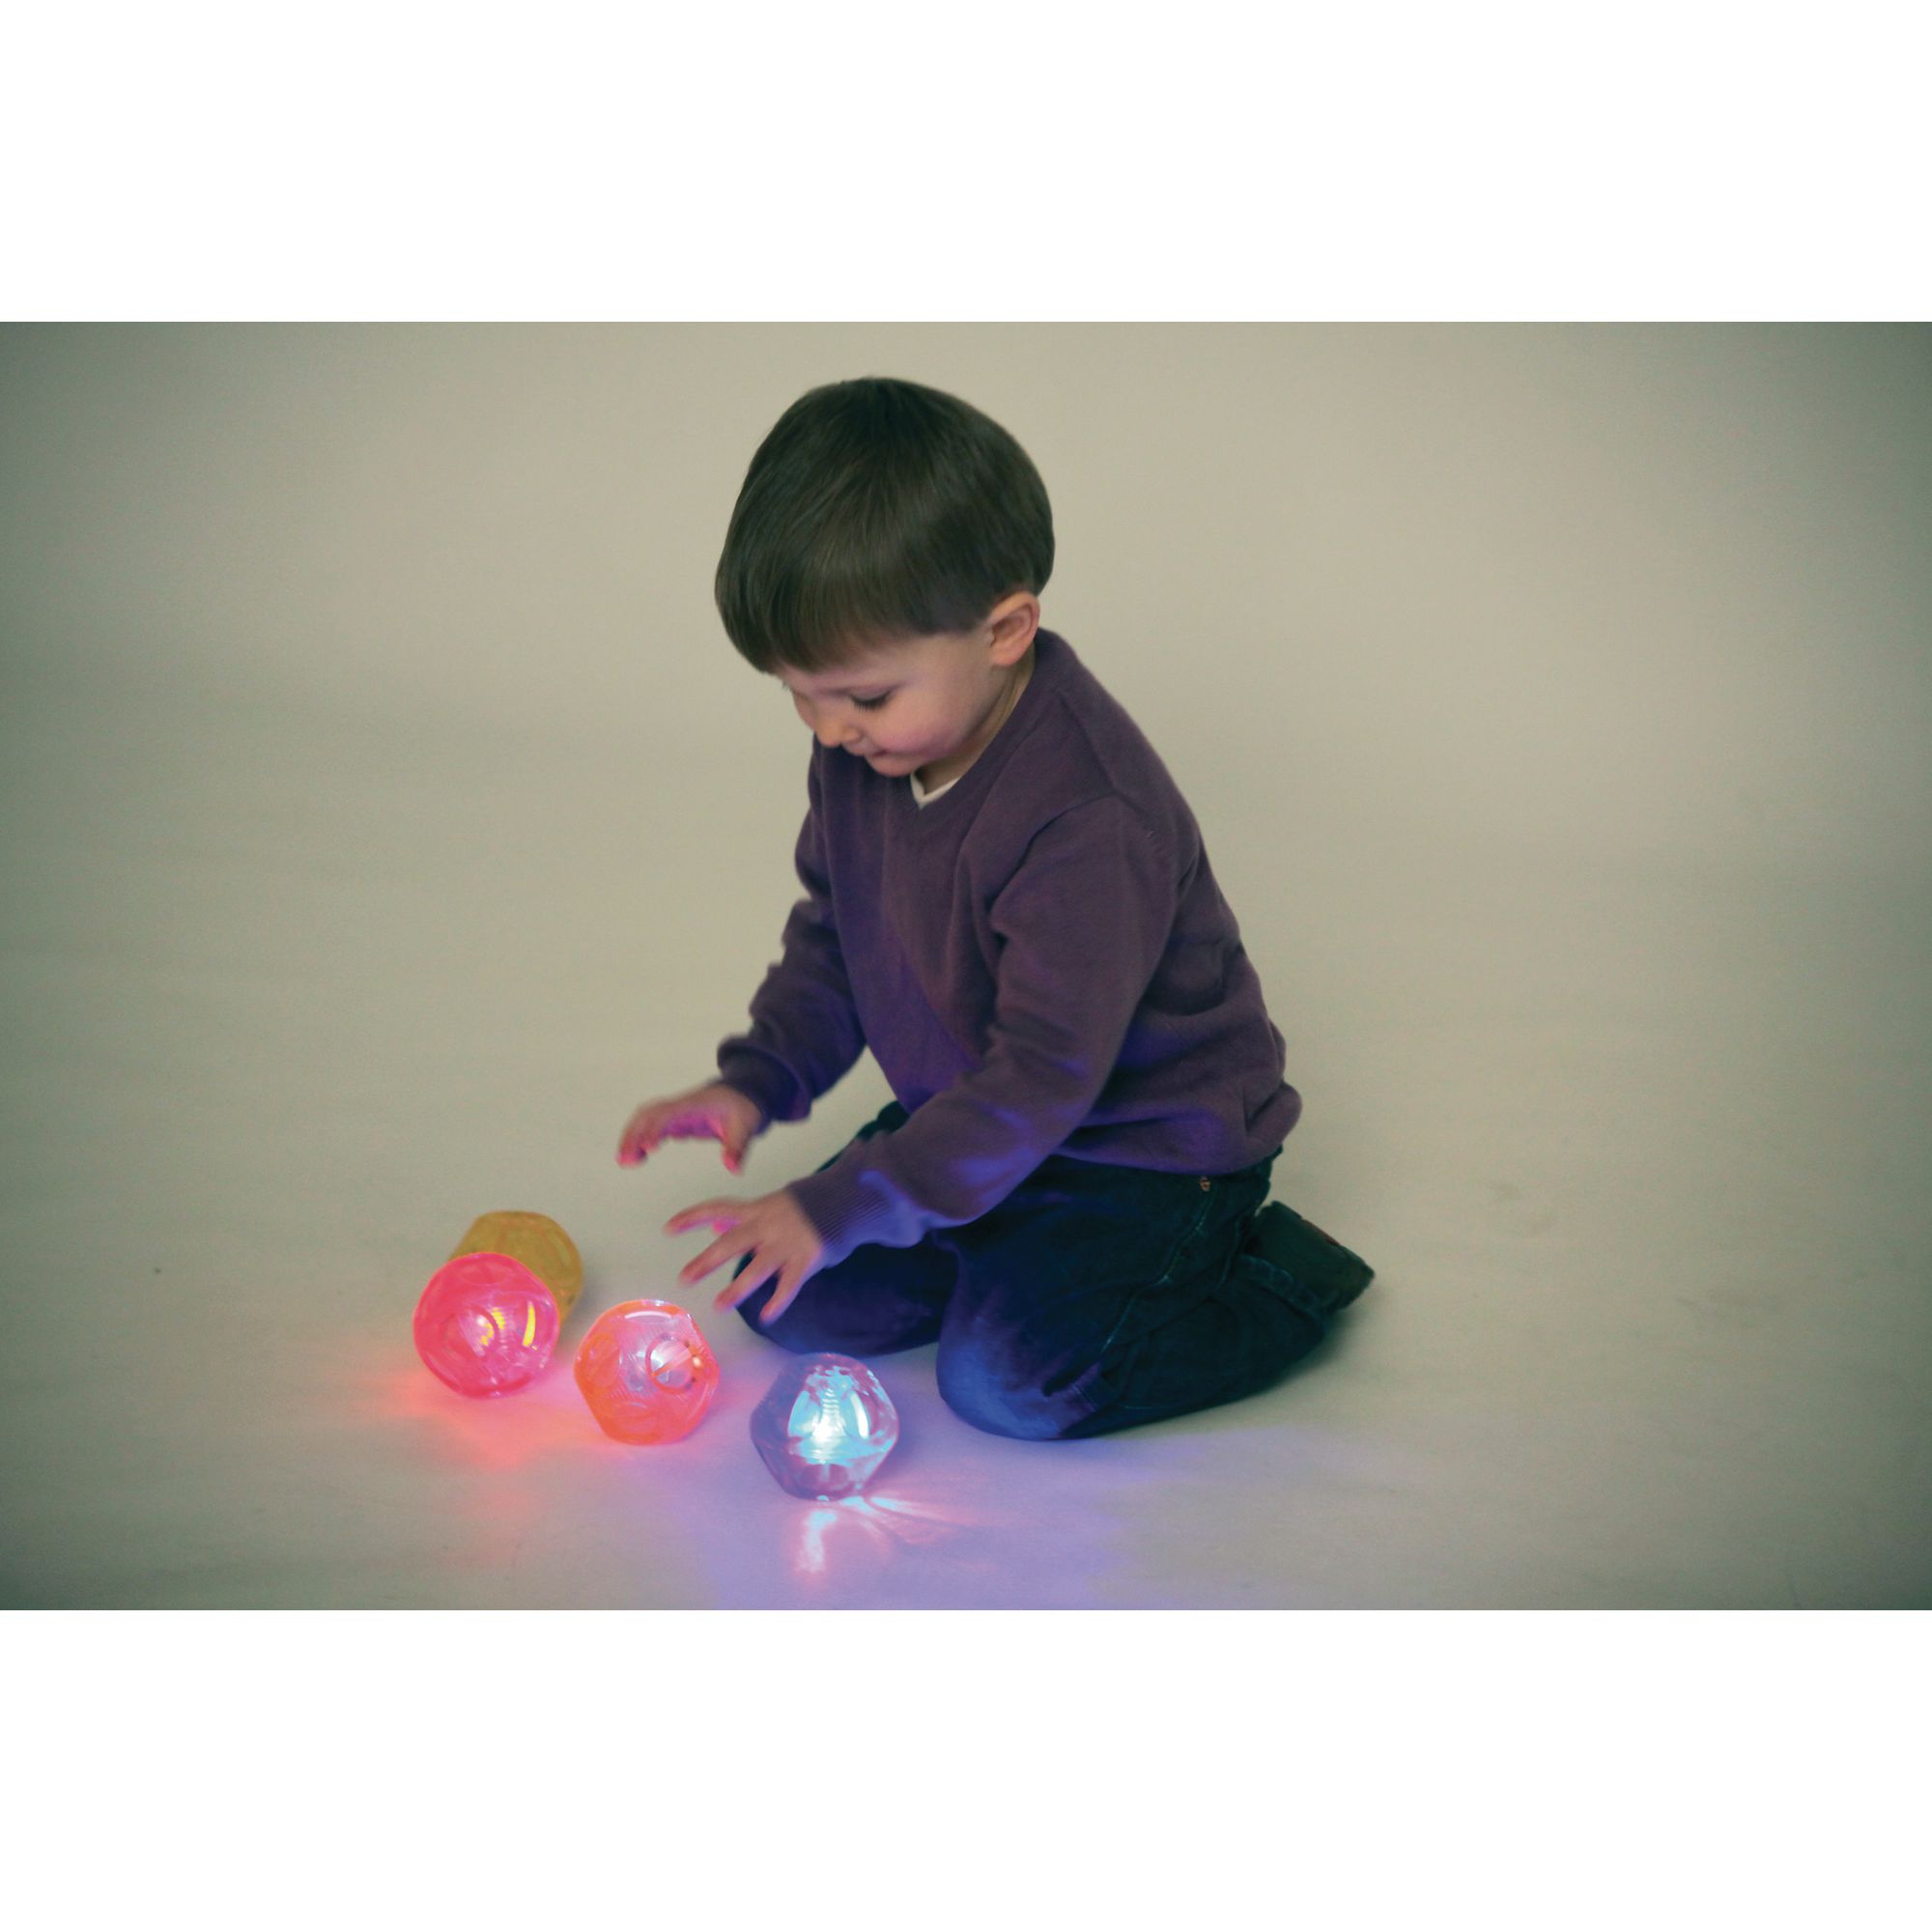 baby sensory light ball